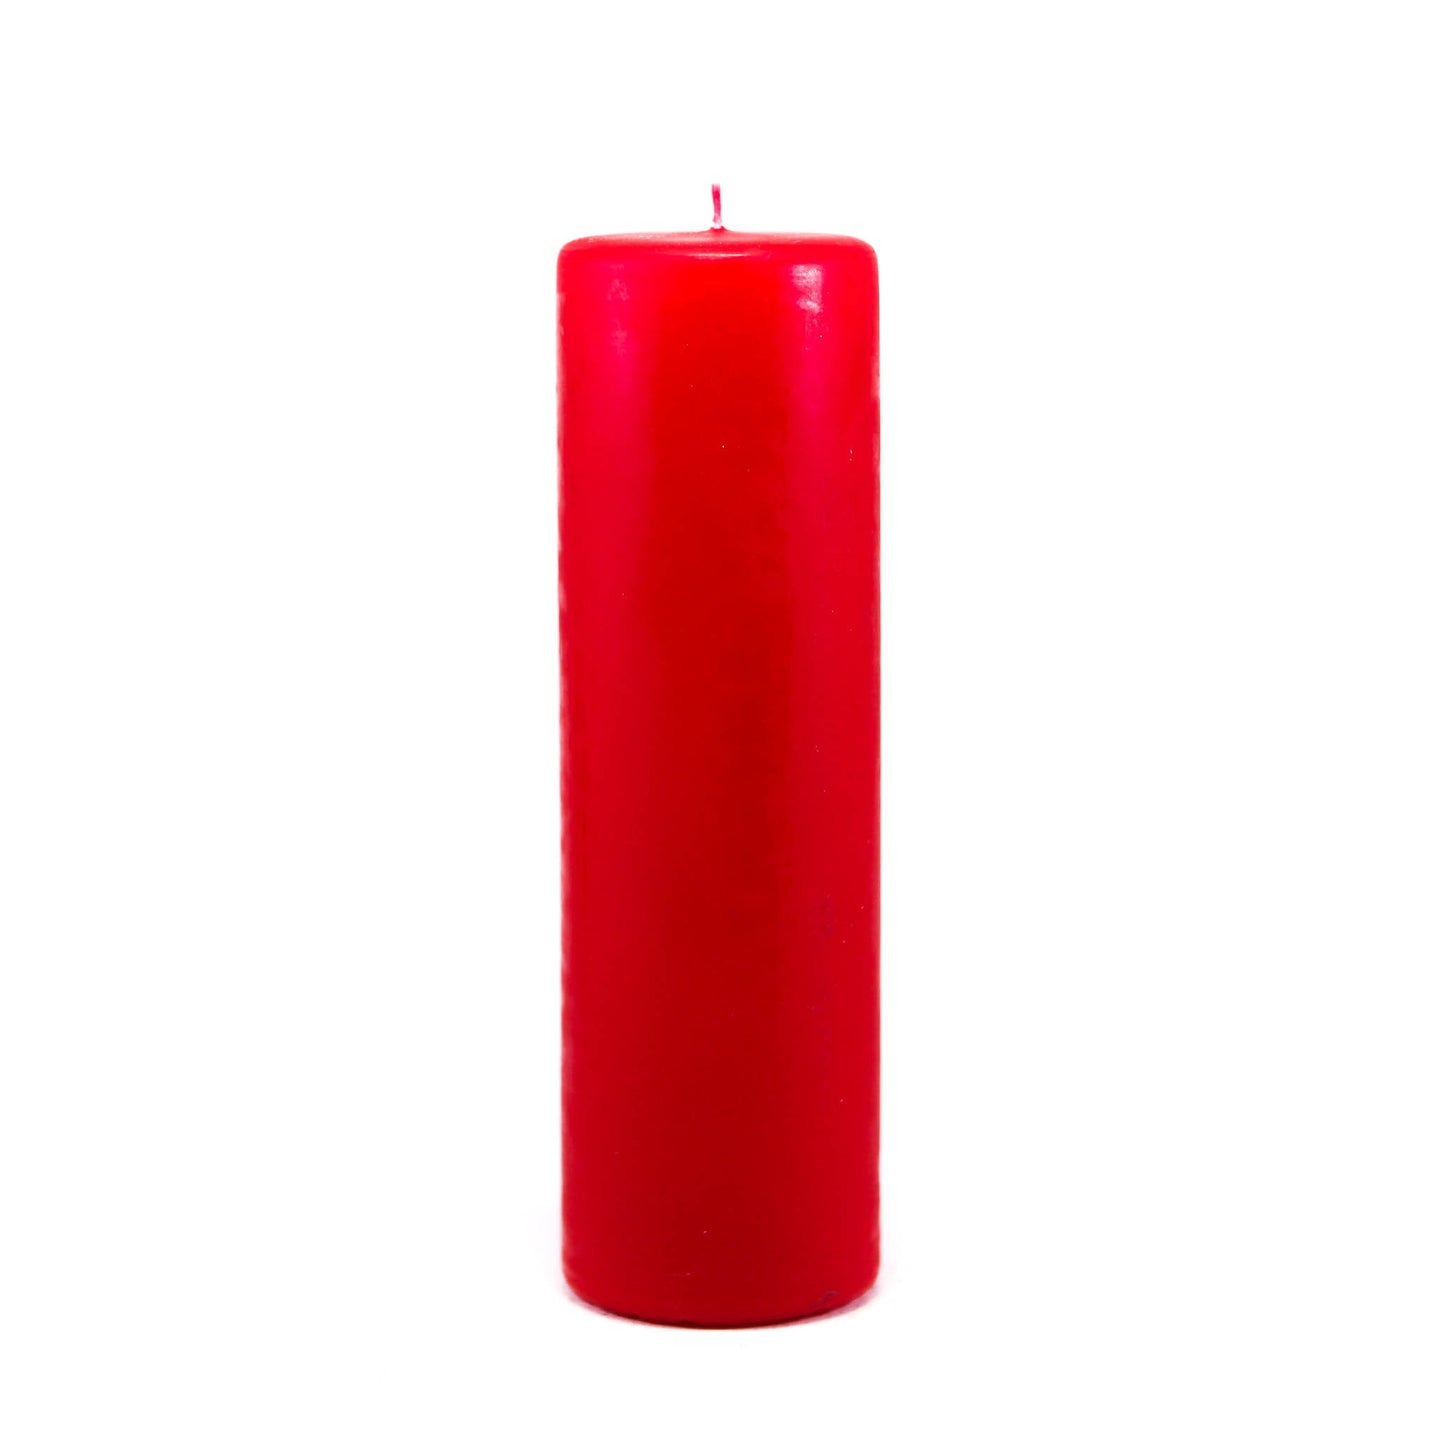 Powderpressed candle ⌀ 6x20 cm, red